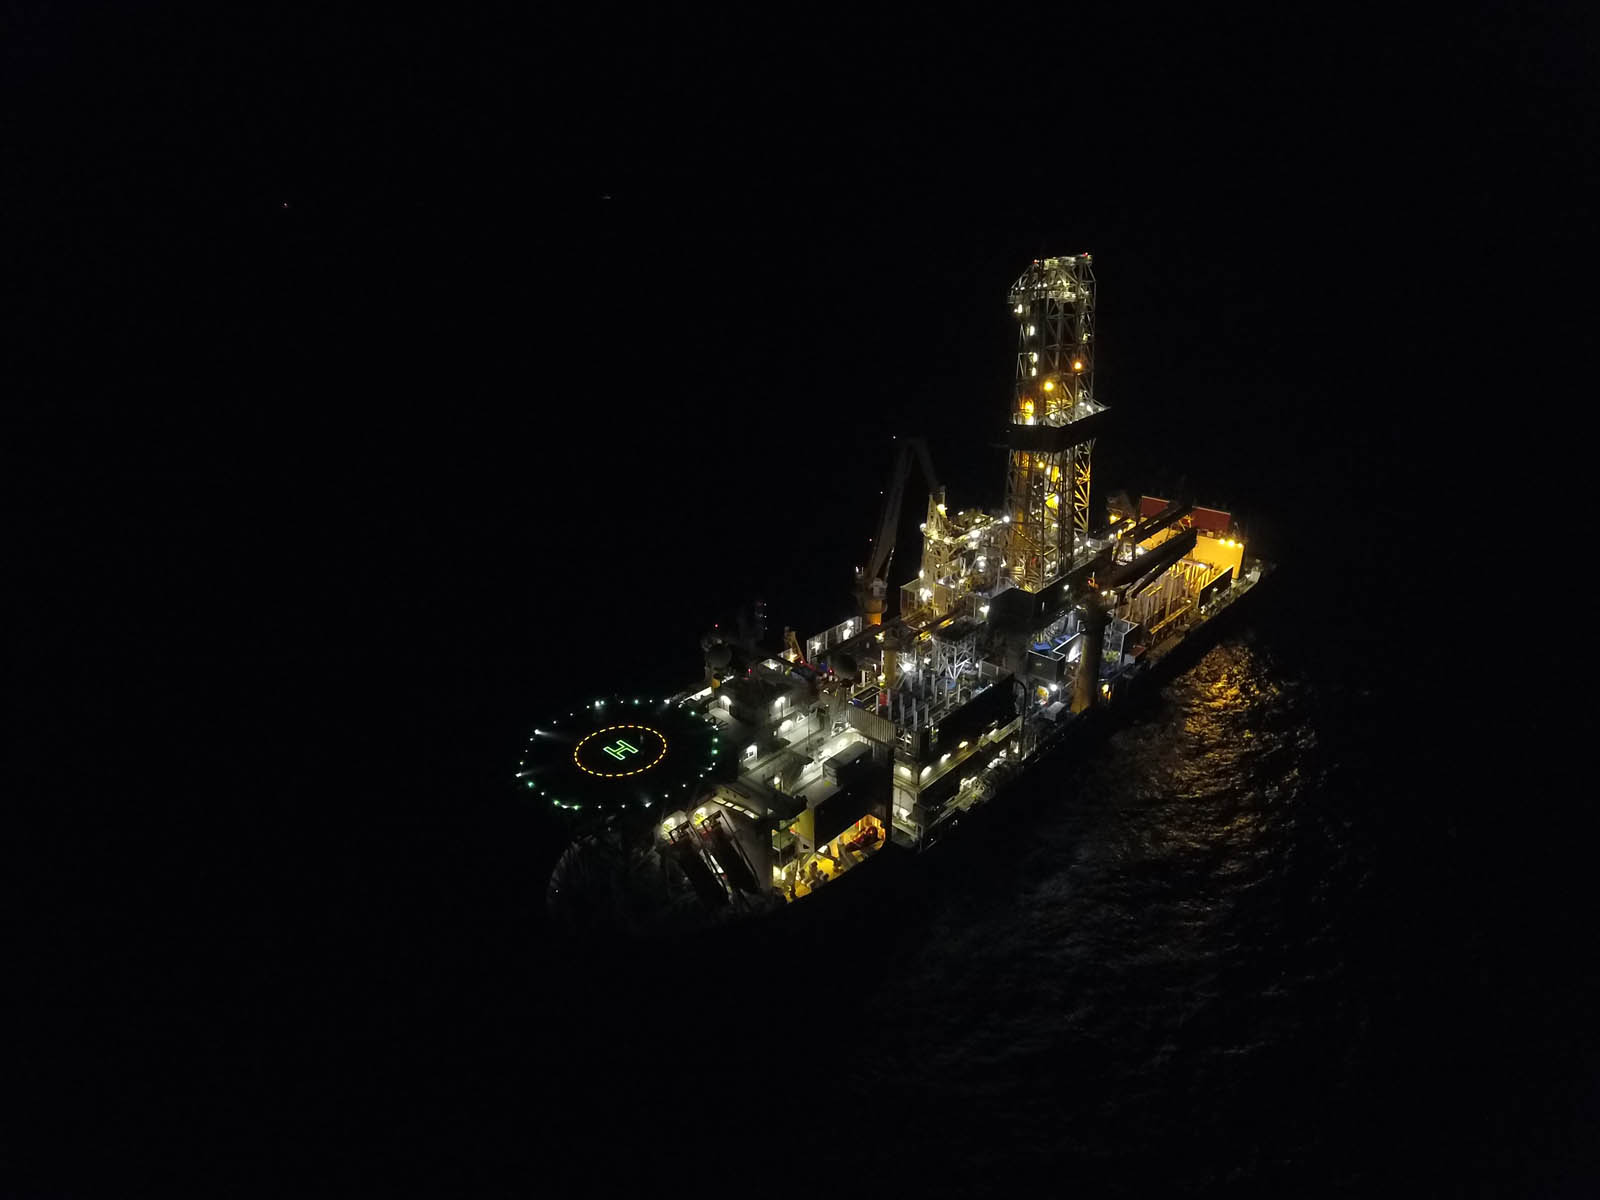 Drillship at night with lights